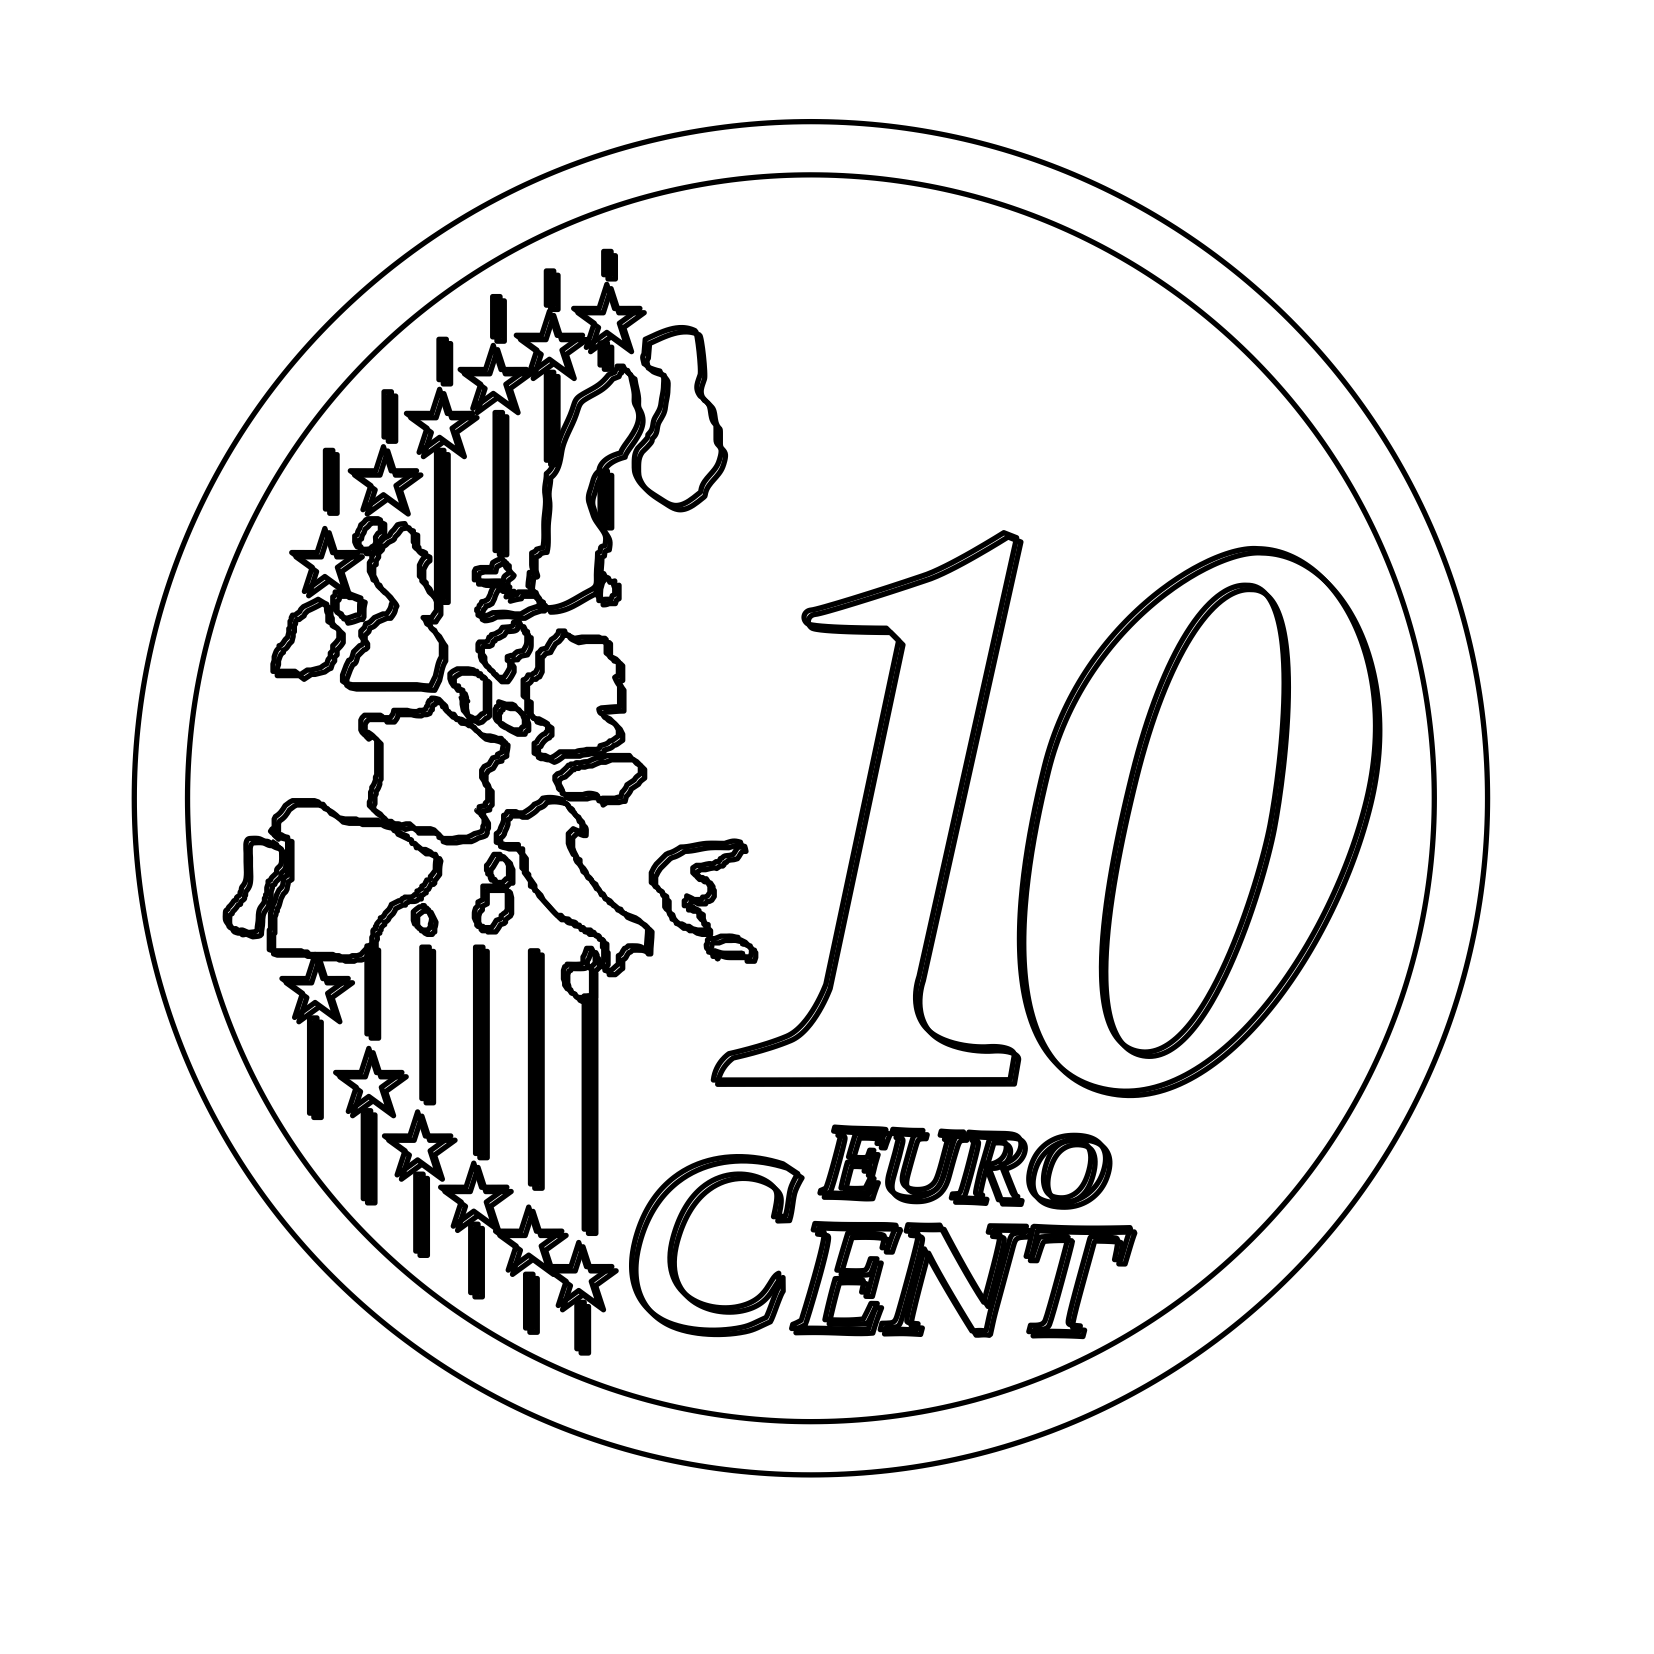 10 euro clipart - photo #34